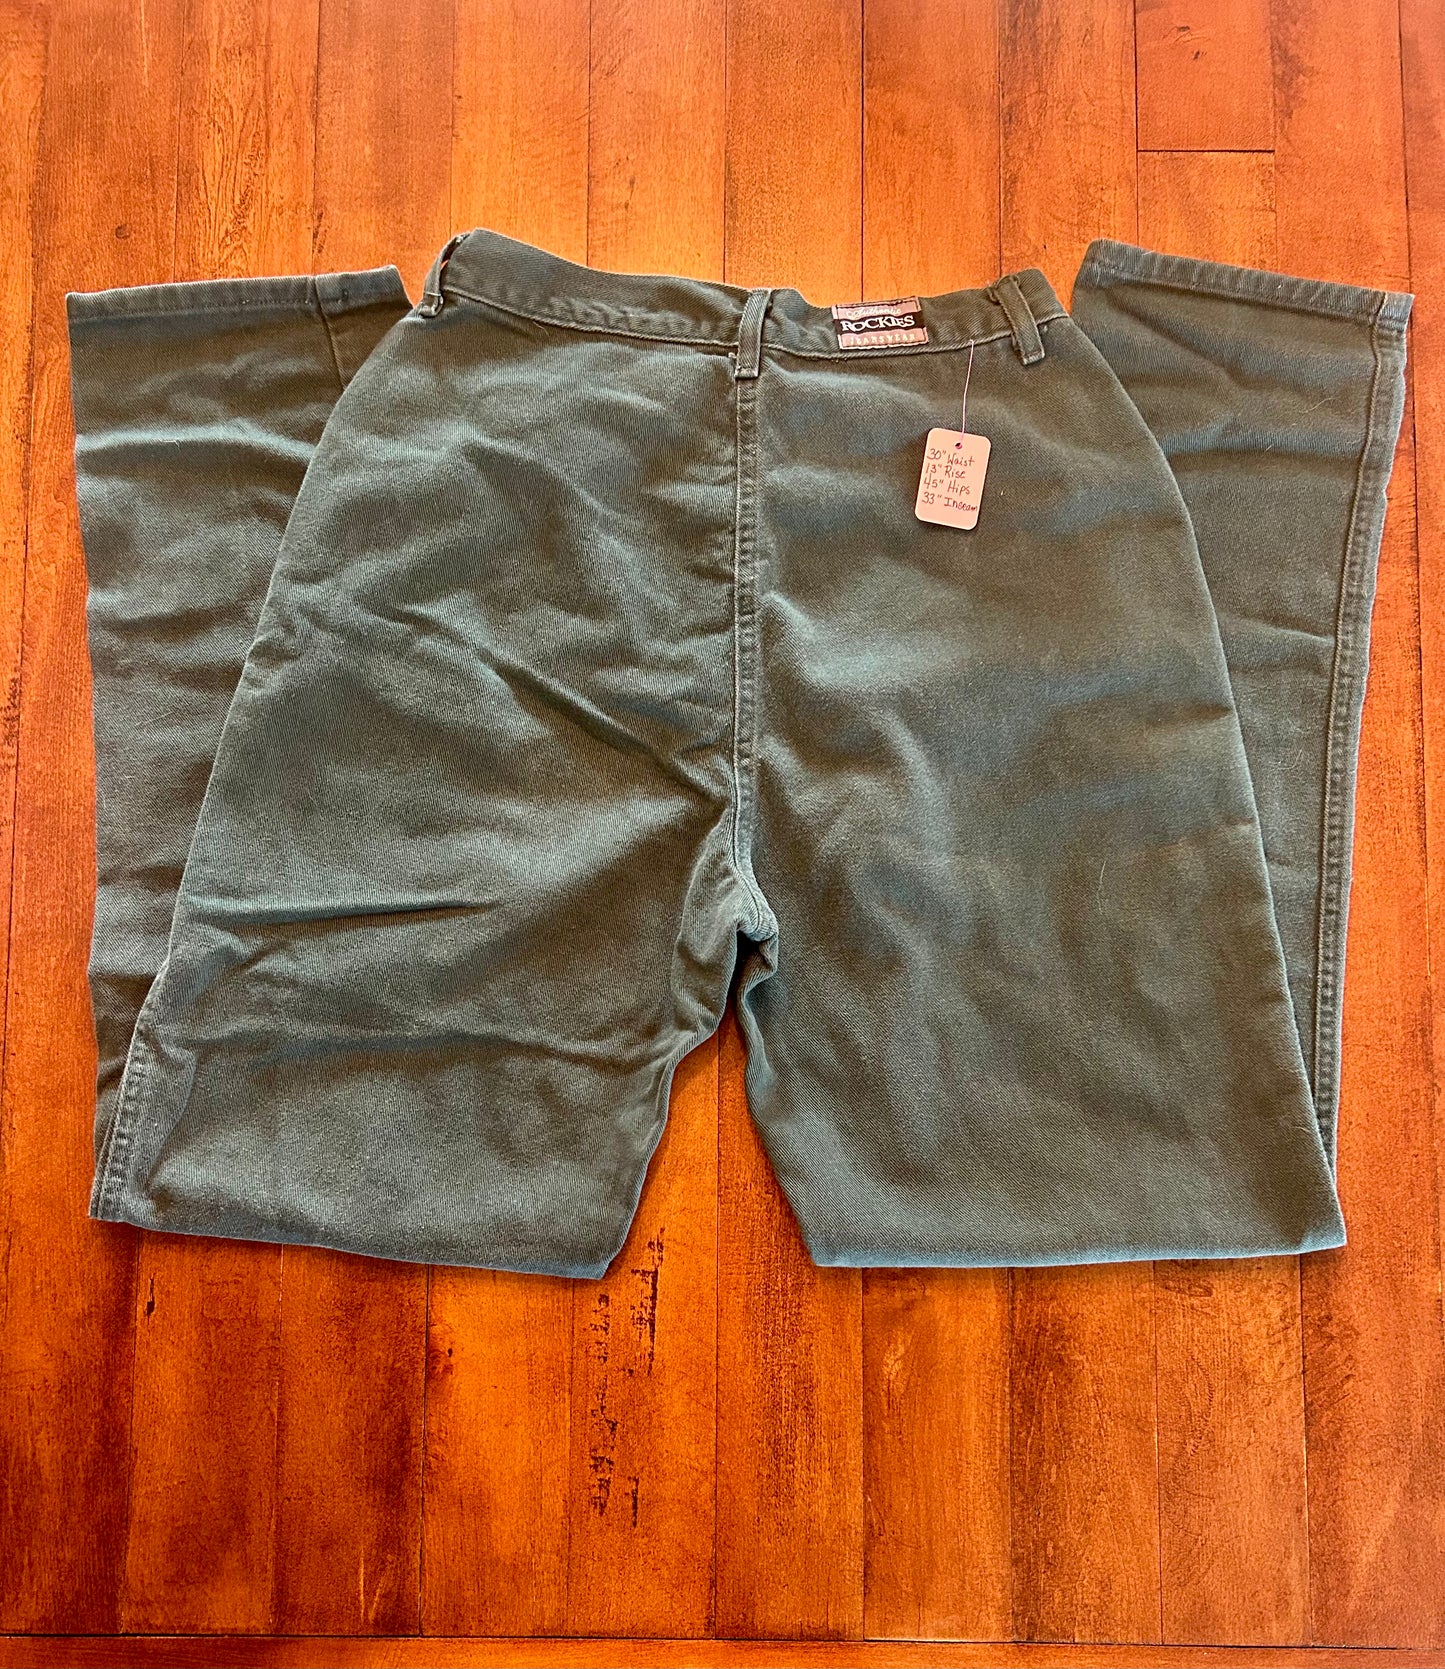 Rockies Bareback Hunter Green Jeans Size 30x33